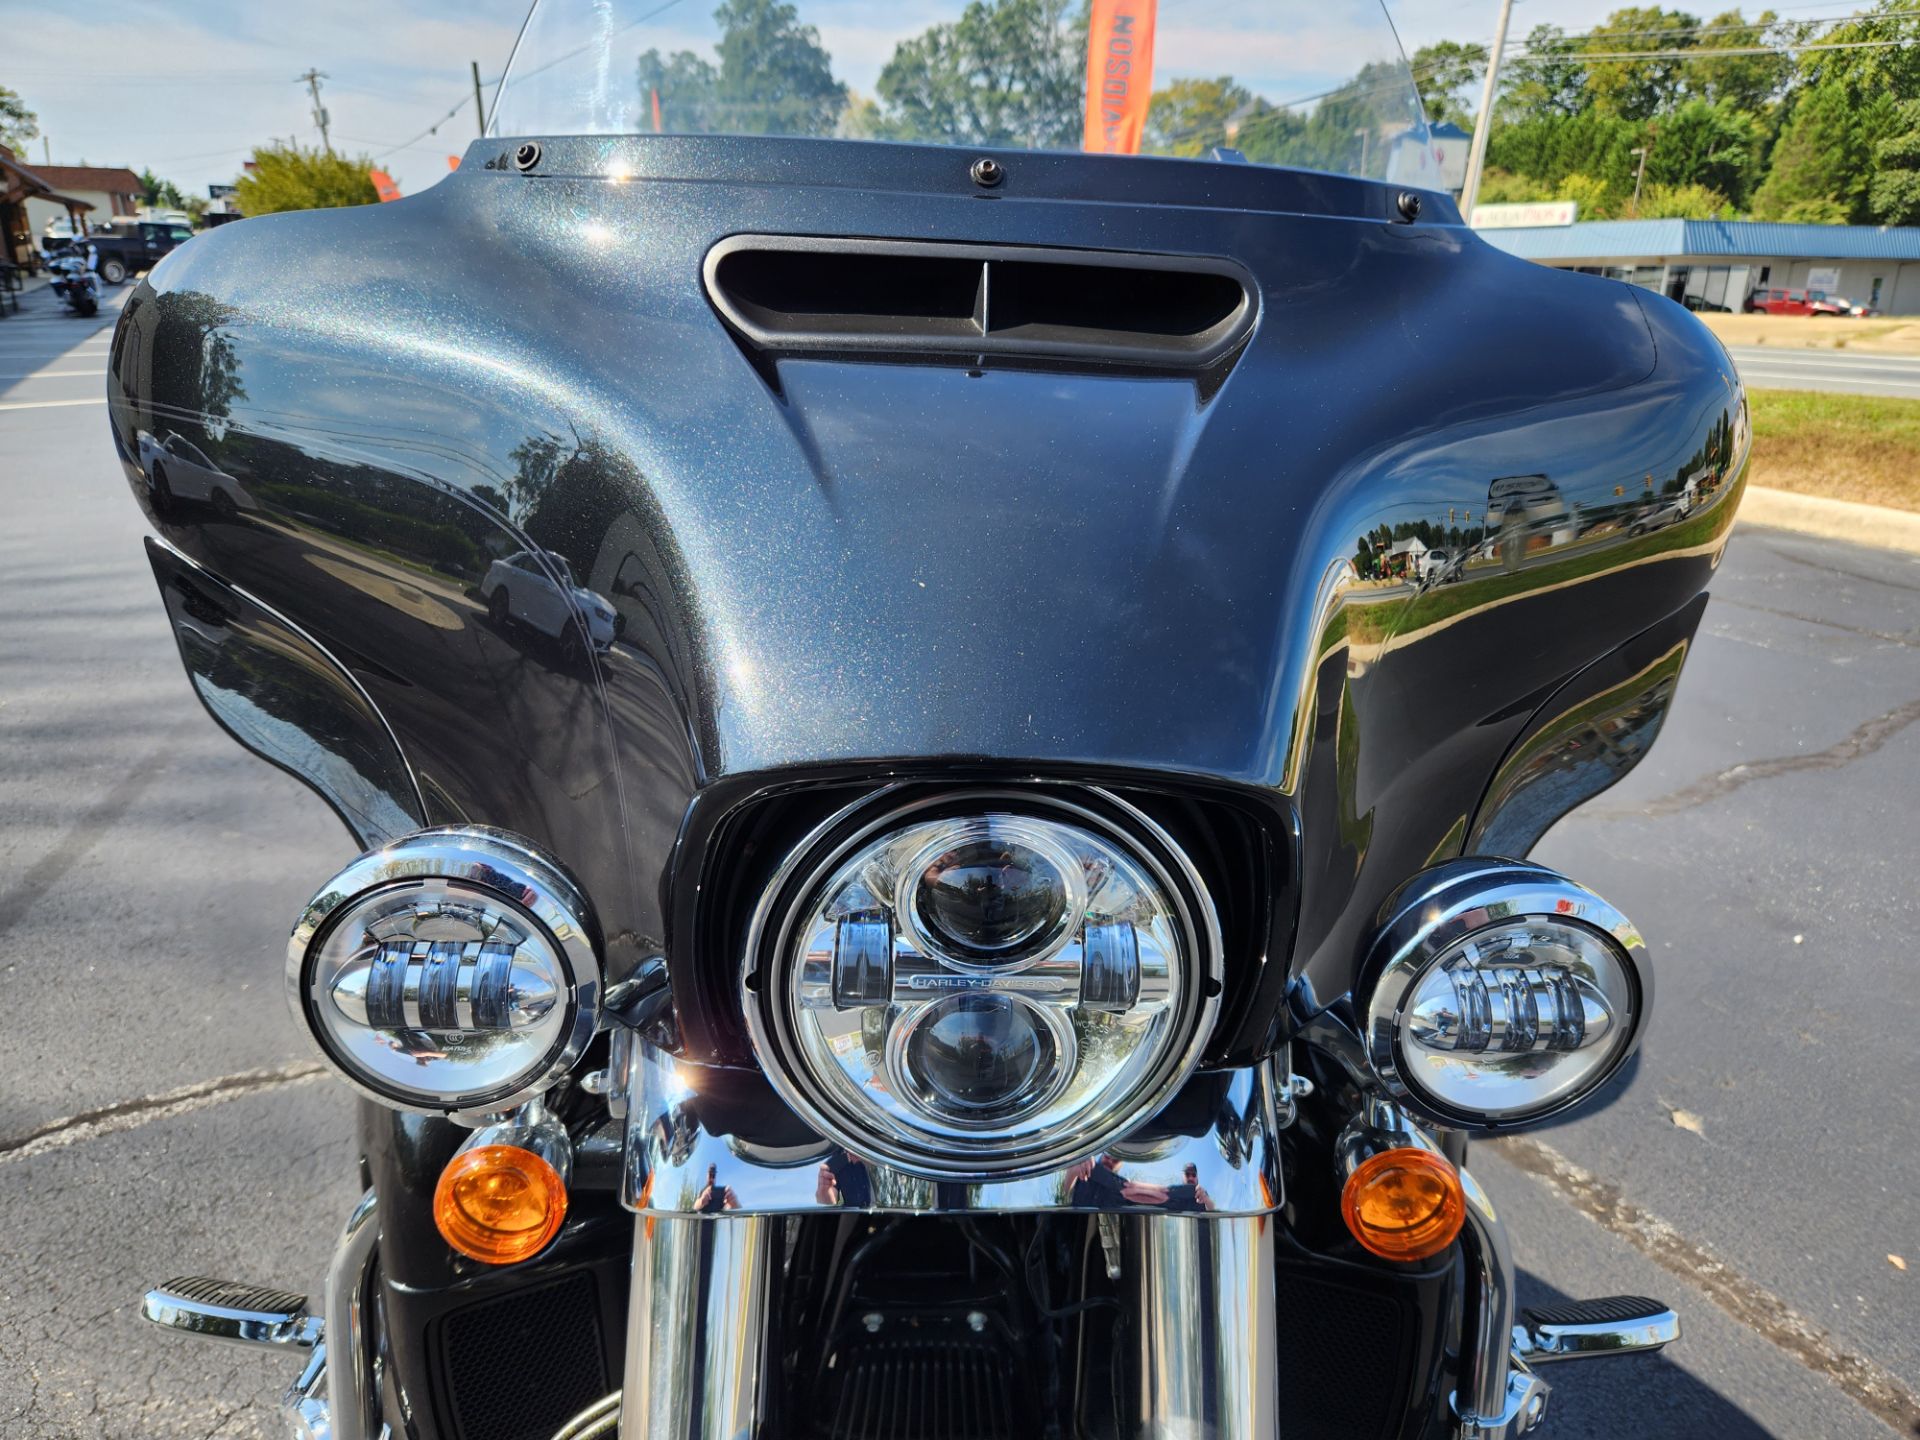 2018 Harley-Davidson Tri Glide® Ultra in Lynchburg, Virginia - Photo 17